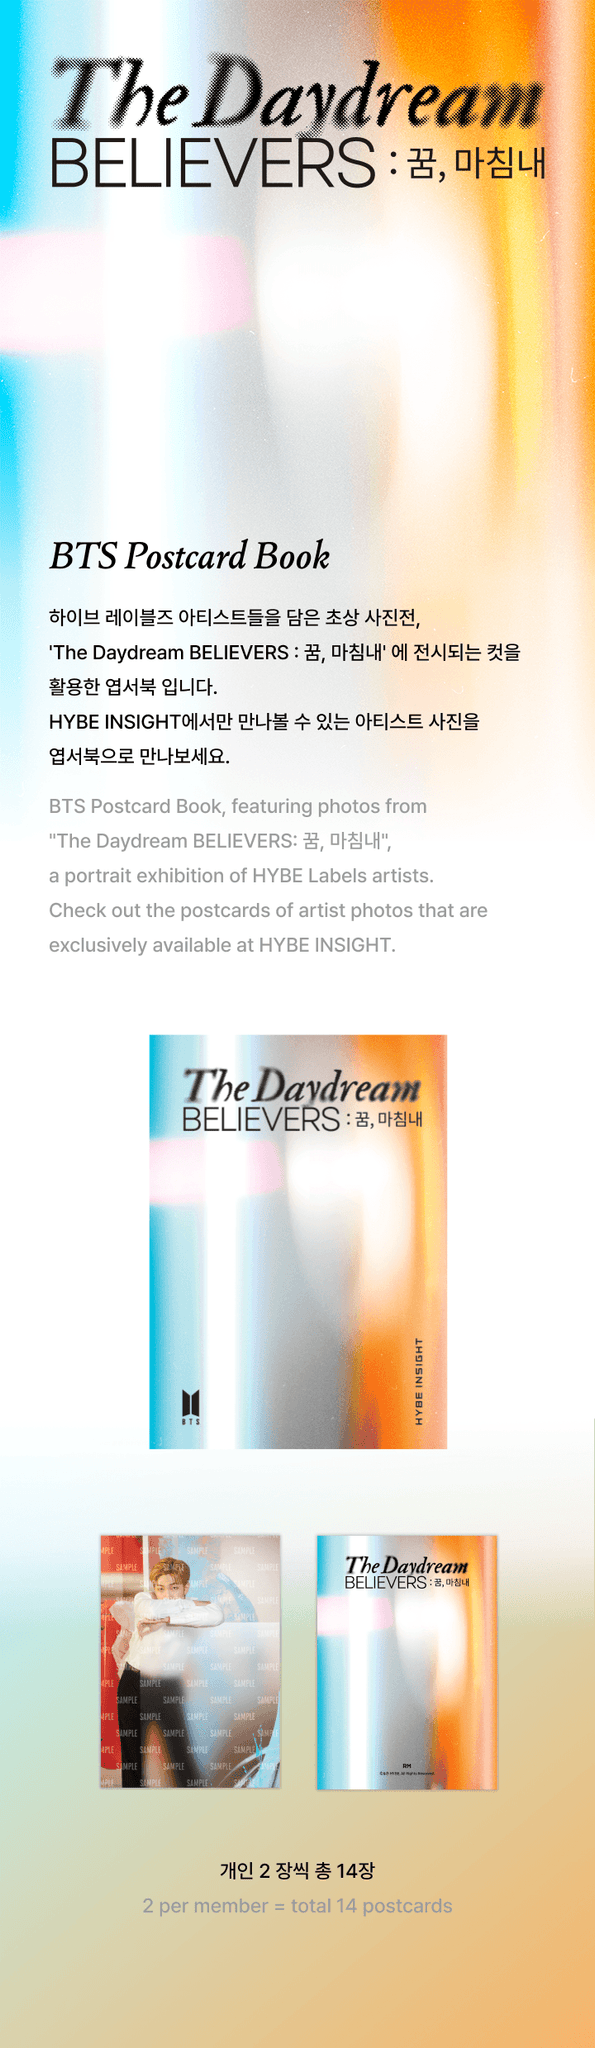 BTS The Daydream Believers Postcard Book